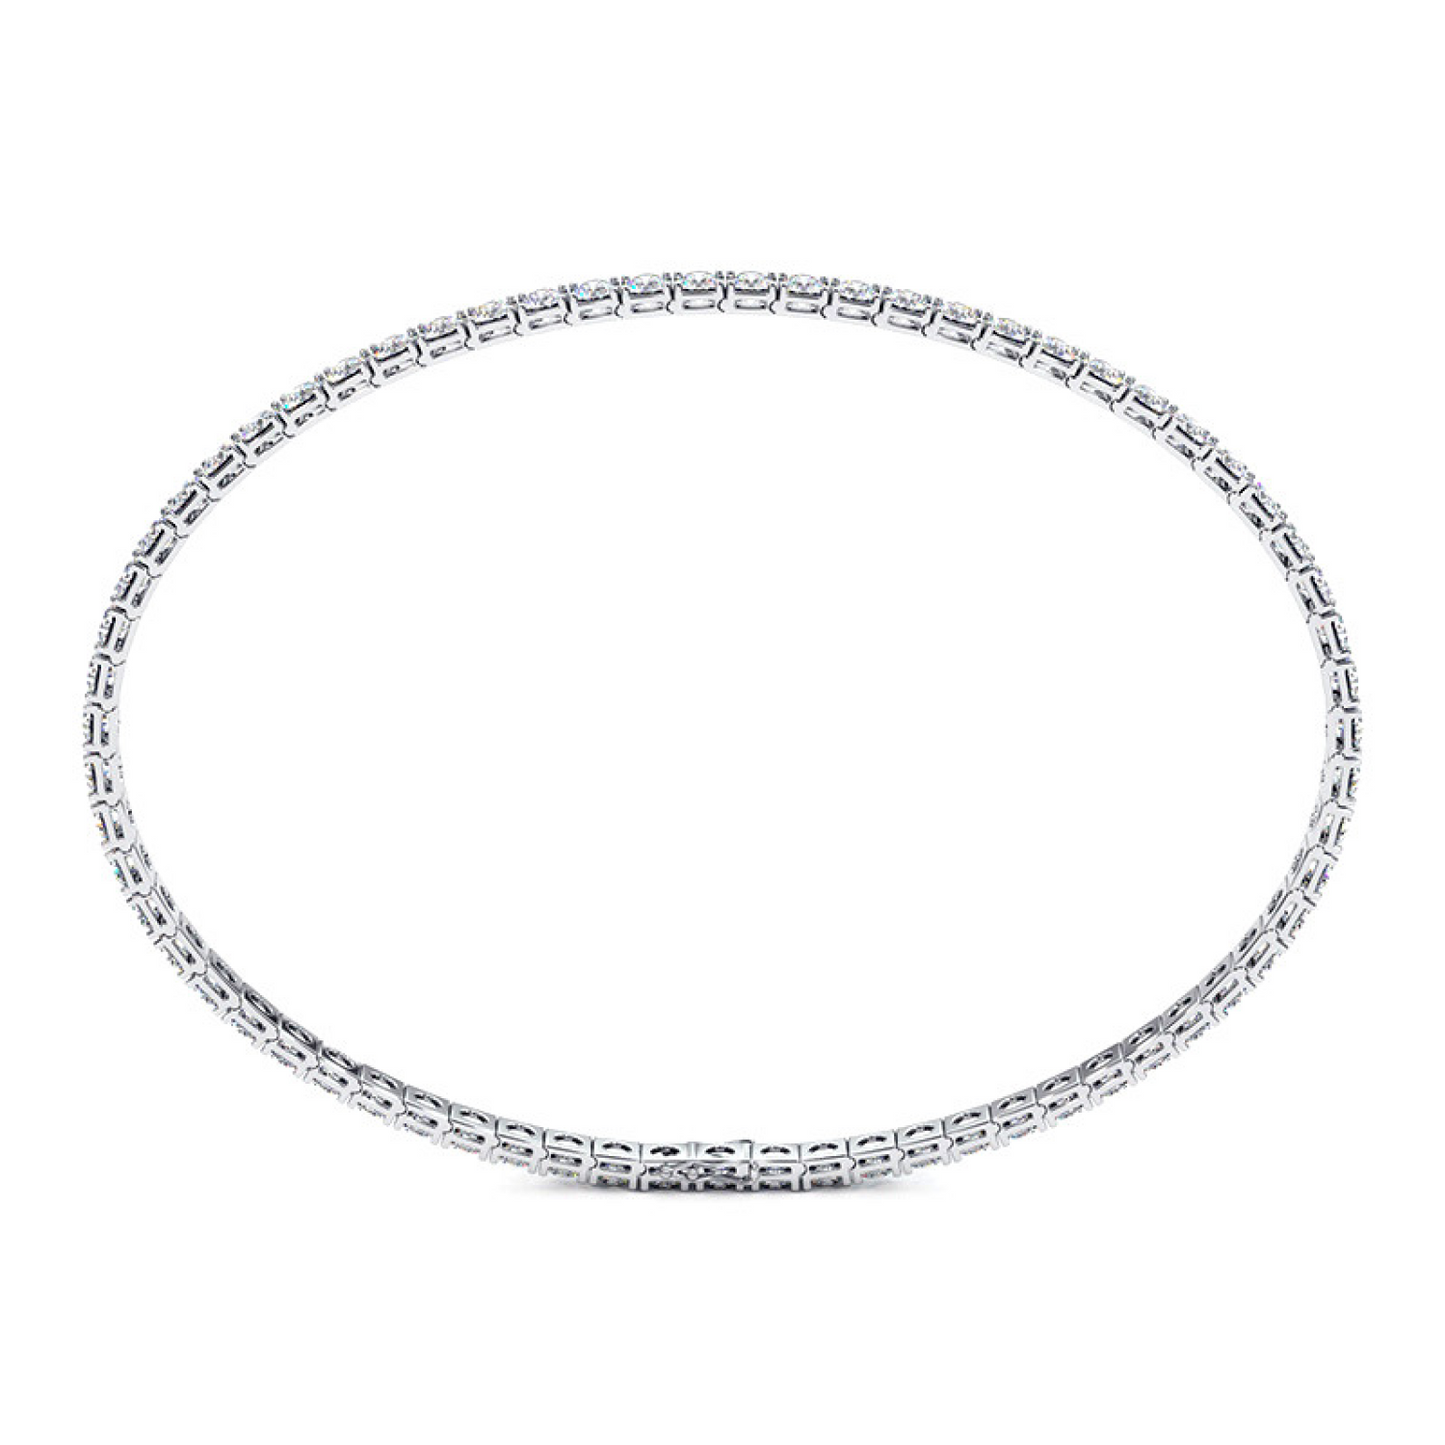 1.00Ct Round Lab Grown Diamond Tennis Bracelet 18K White Gold 24kdiamond